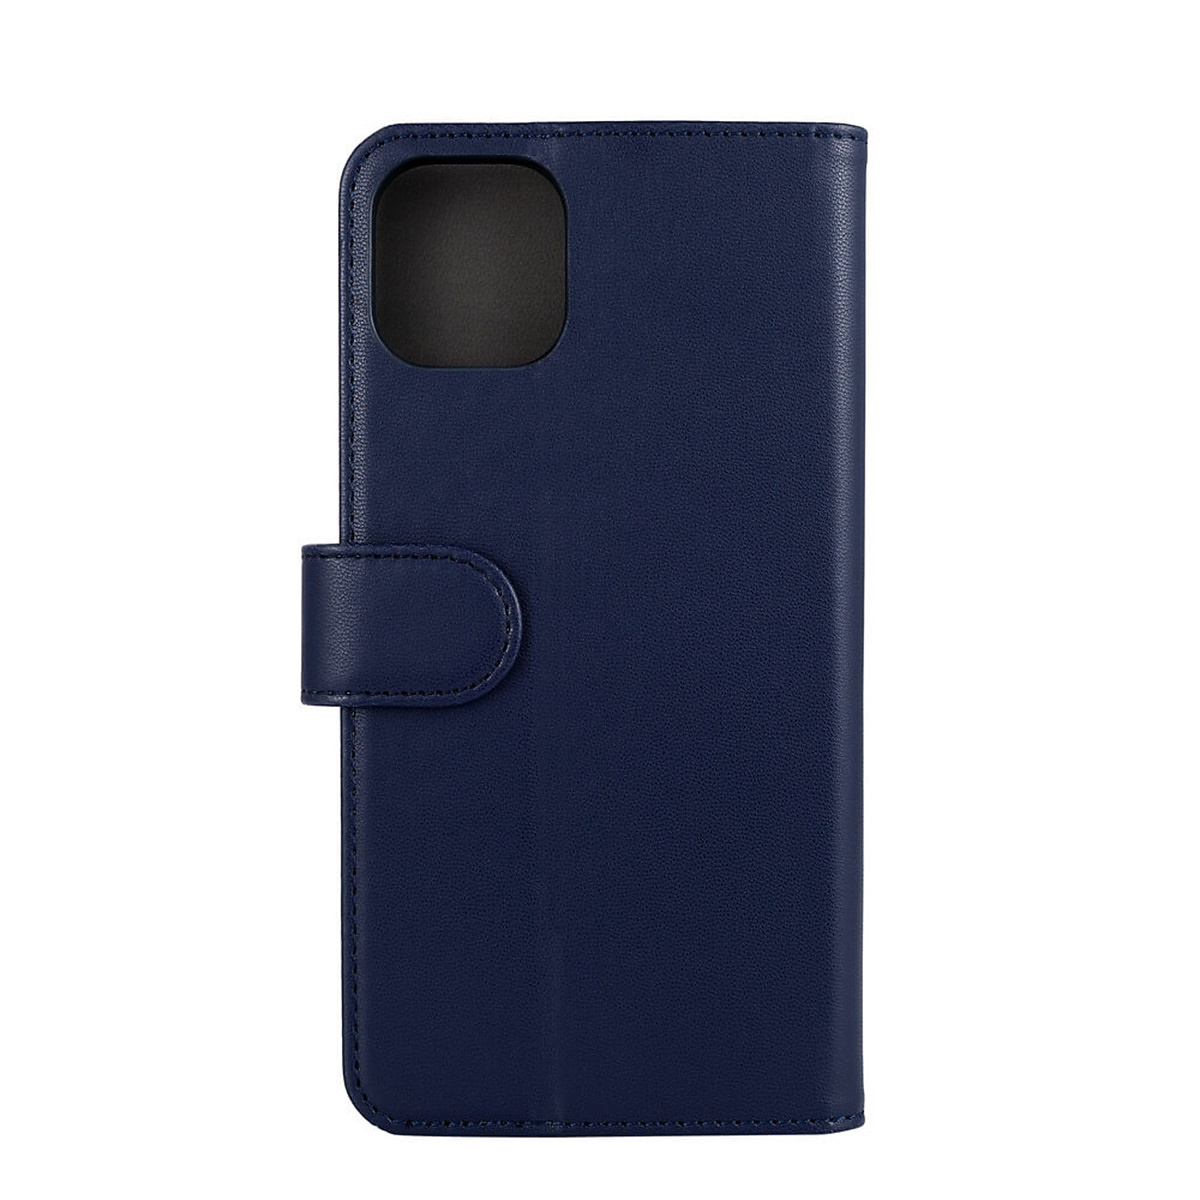 Gear plånboksväska, Limited Edition, iPhone 11 Pro Max, blå